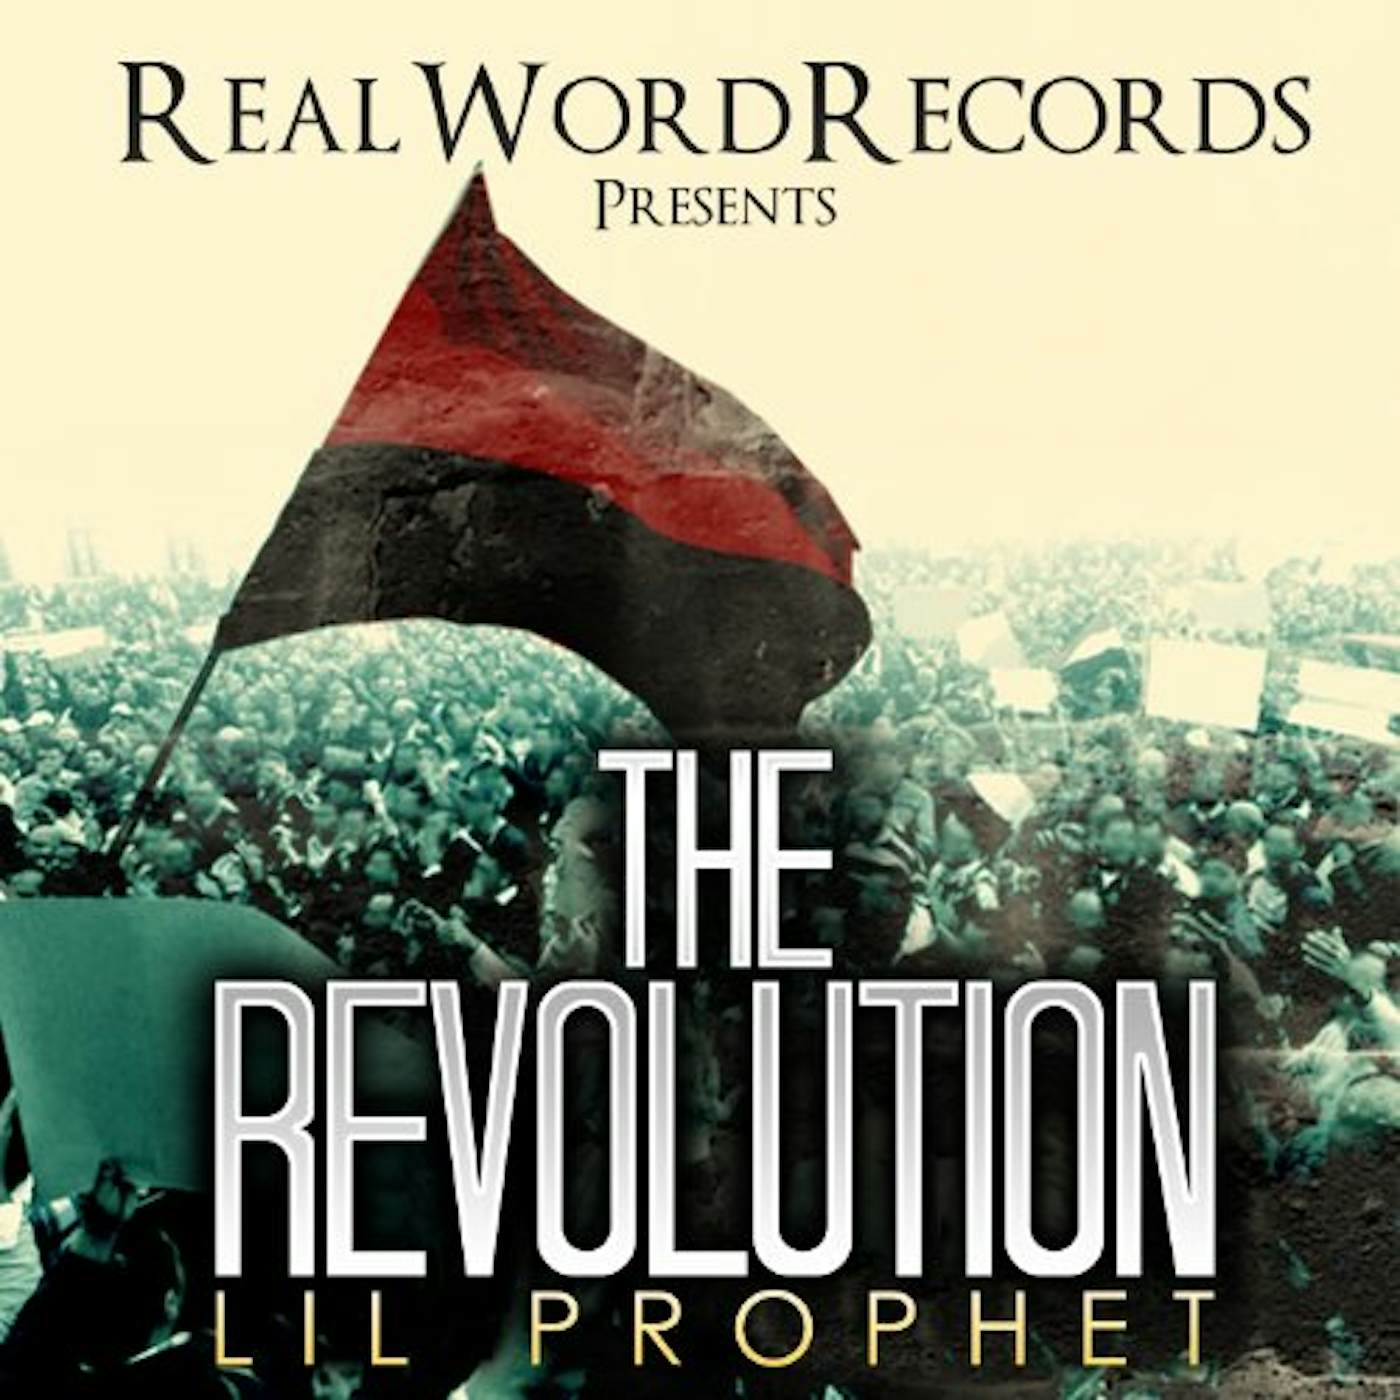 Lil Prophet REVOLUTION CD